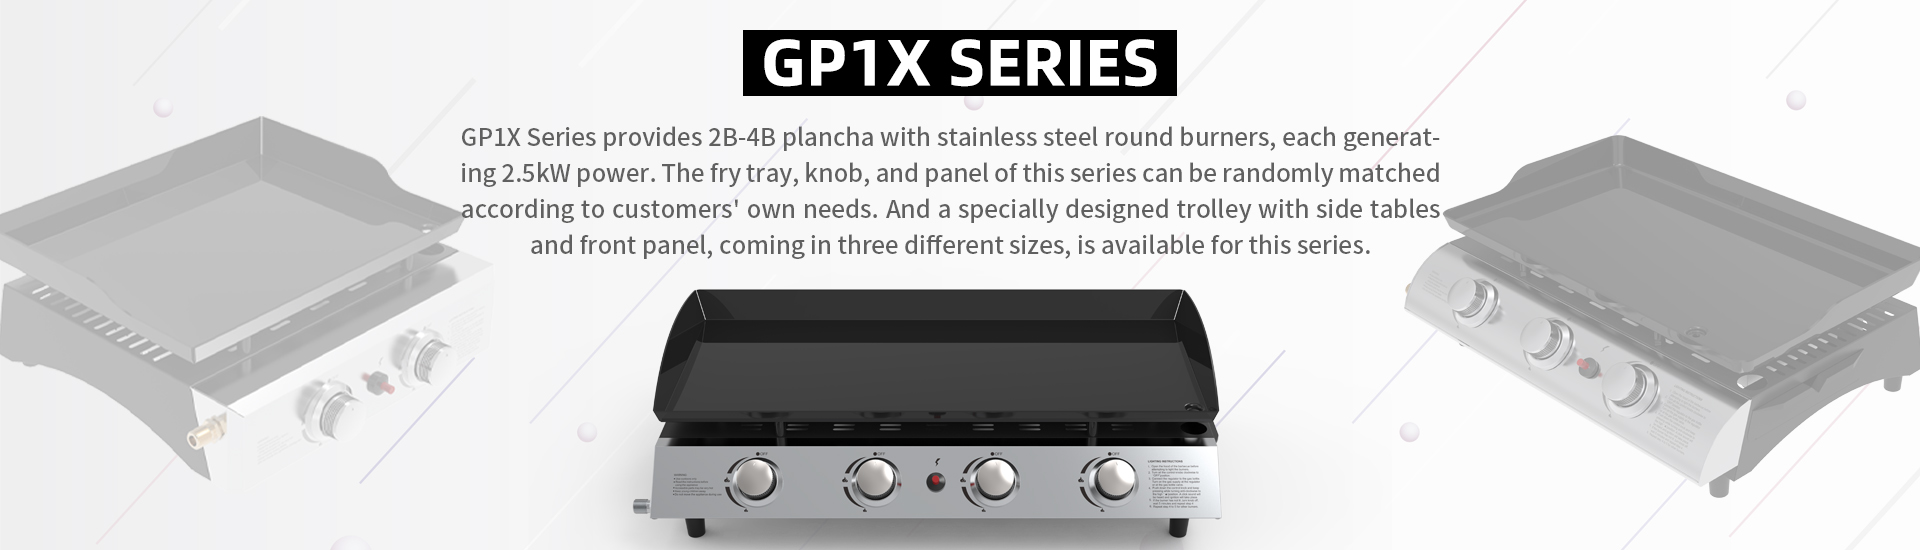 GP1X Series